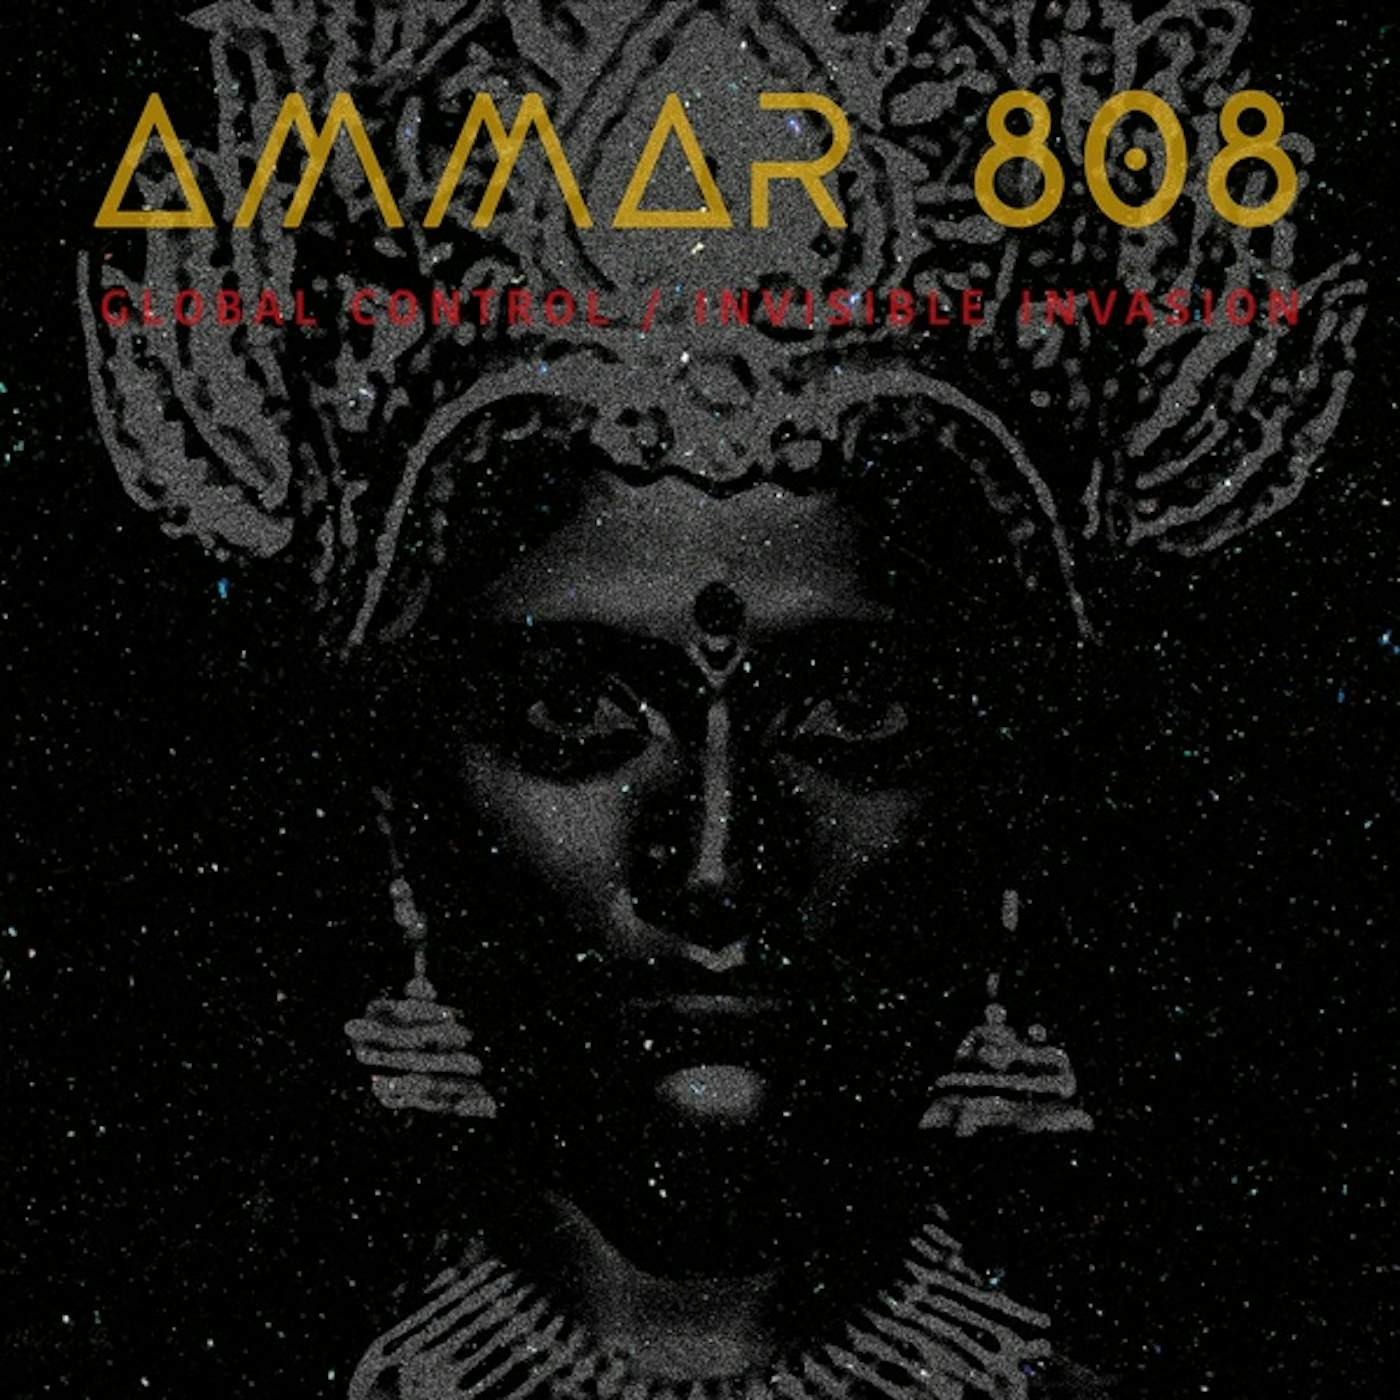 Ammar 808 Global Control / Invisible Invasion Vinyl Record